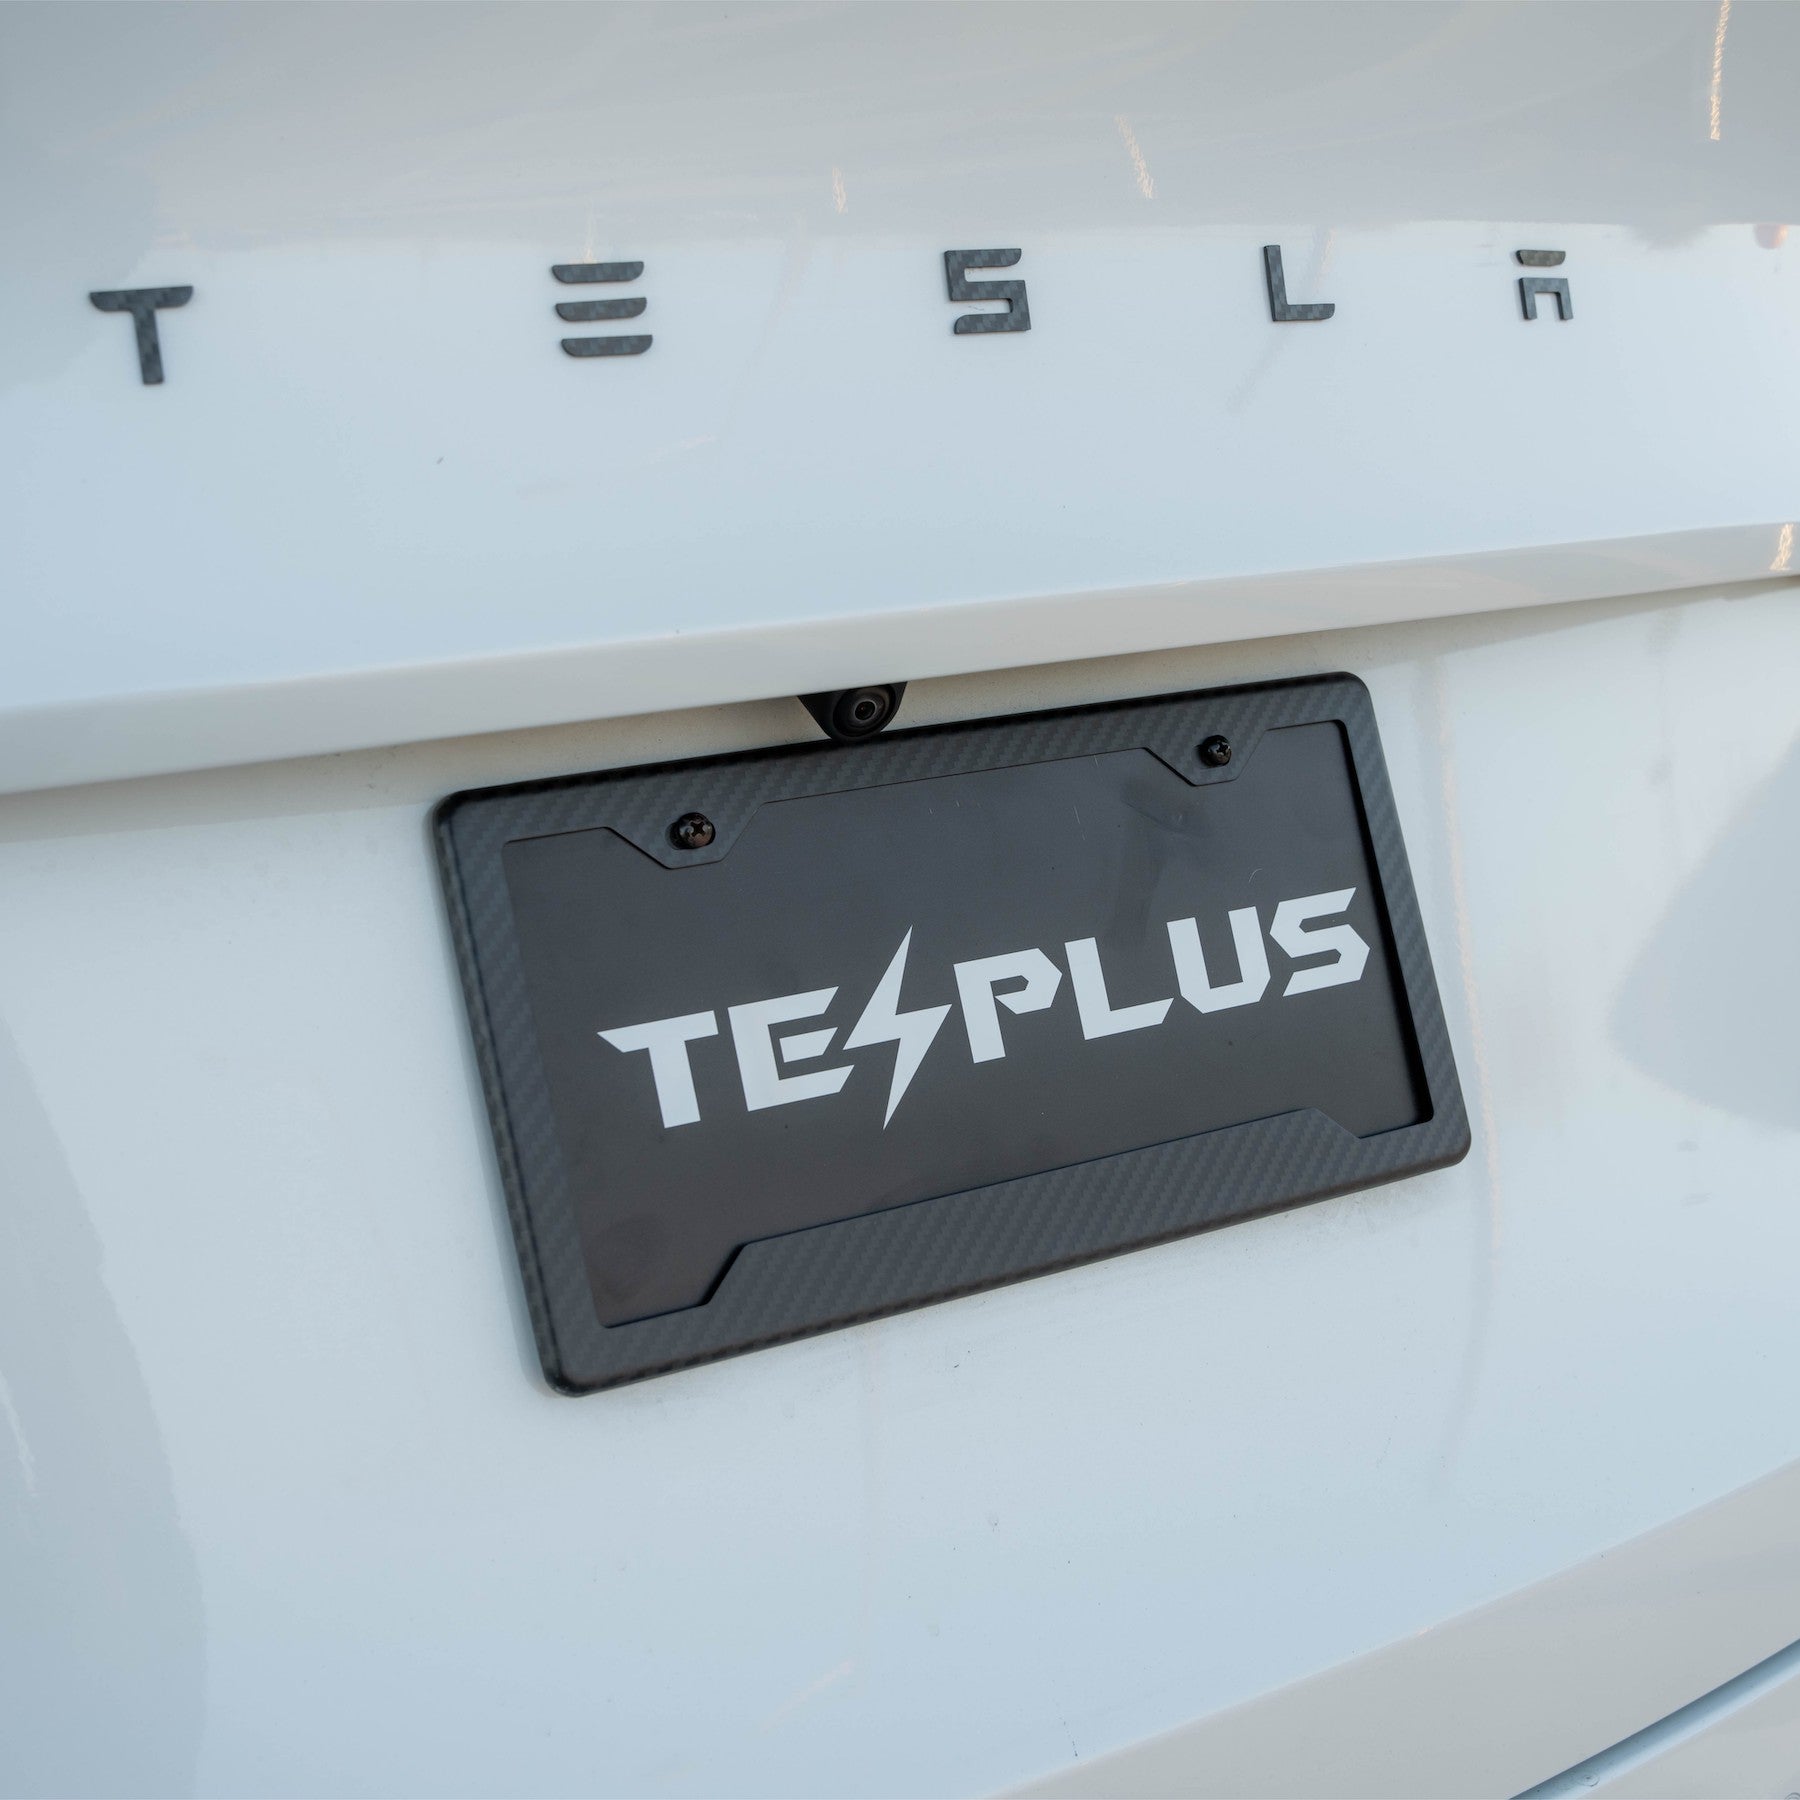 Carbon Fiber Parts For Tesla Model X | Tesla Carbon Fiber Parts - TESPLUS